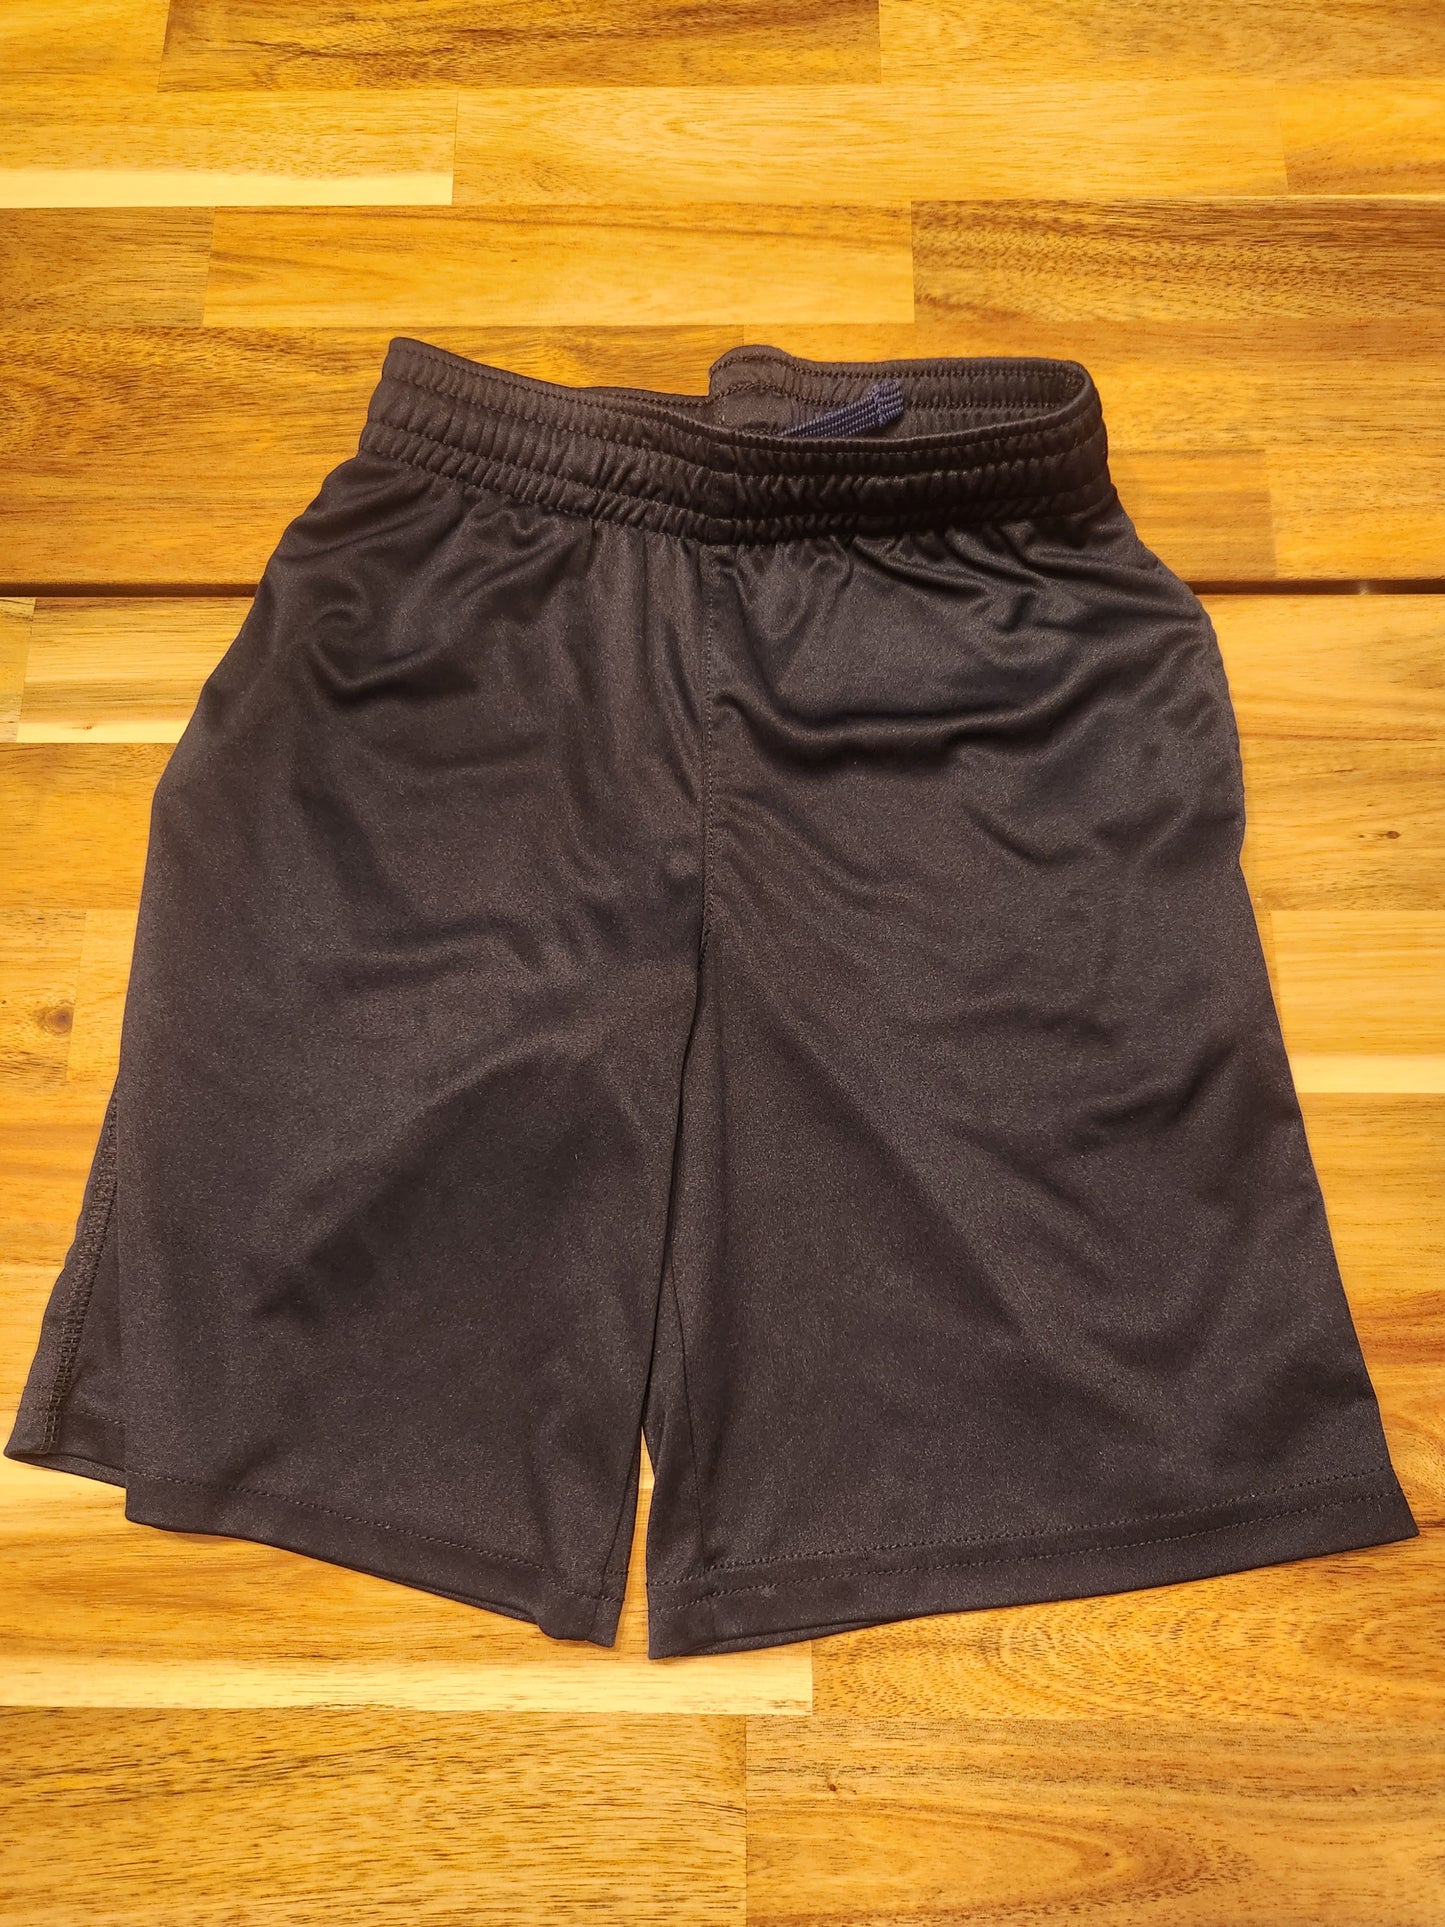 Athletic shorts sz SM (6/7)